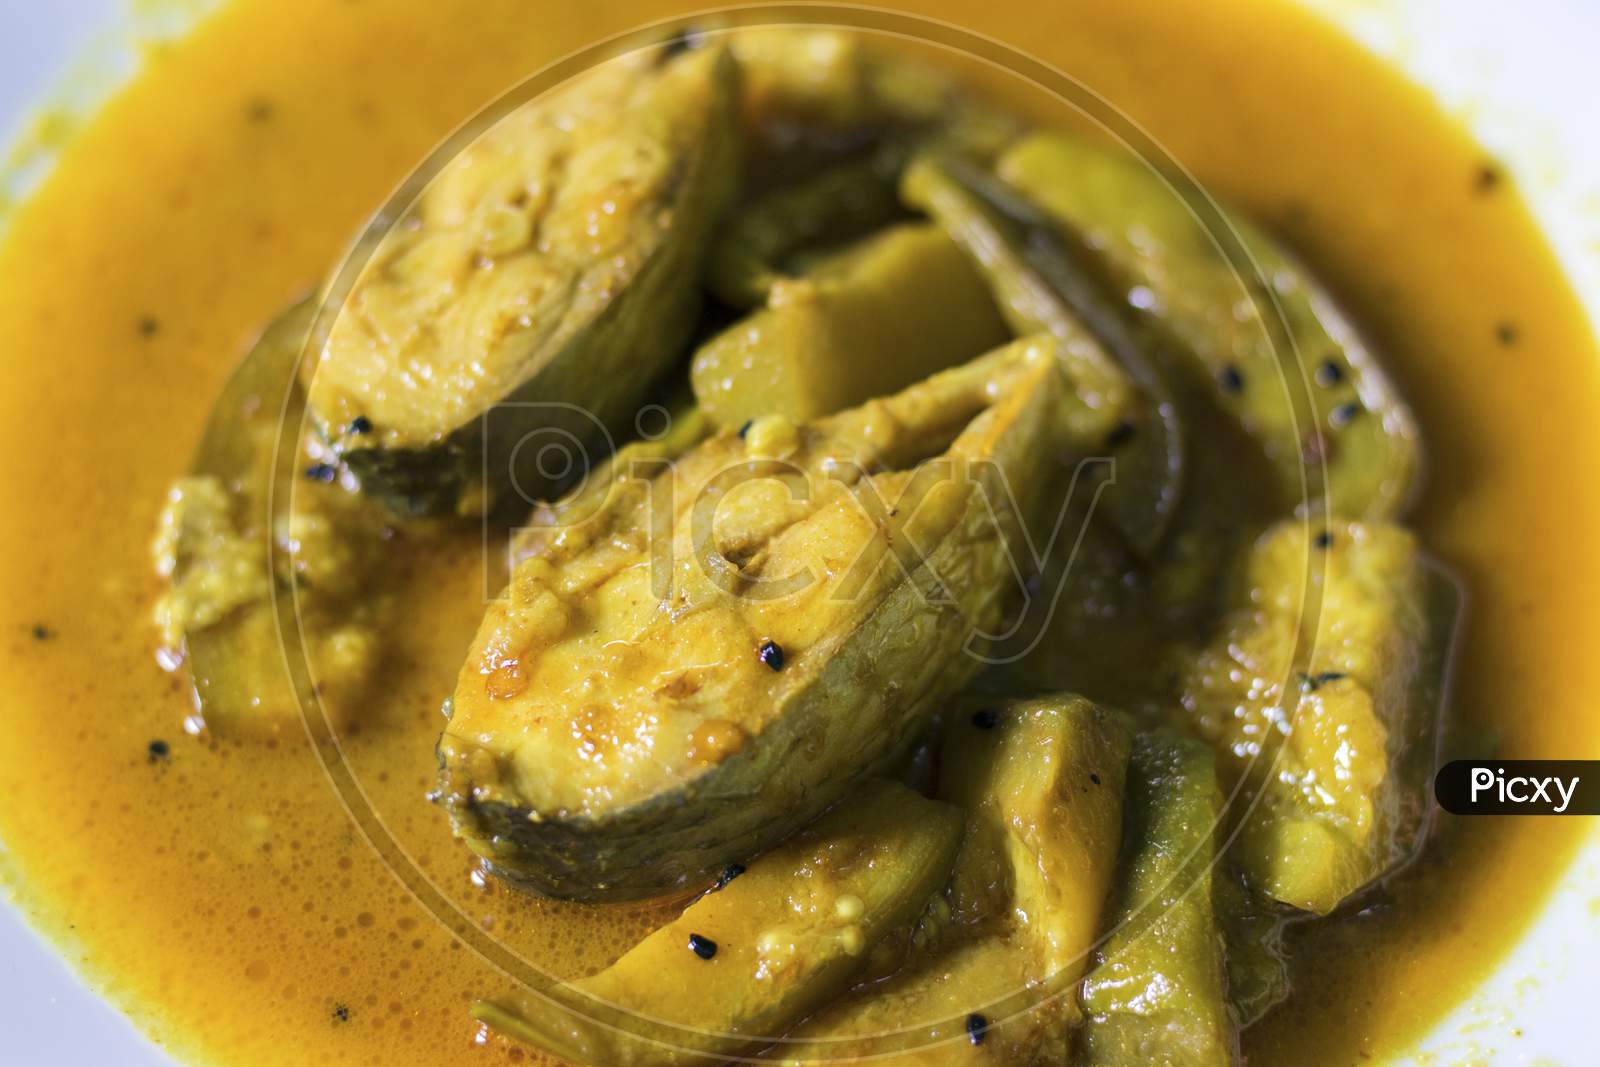 famous Bengali dish hilsha/Ilish with brinjal/Eggplant recipe.